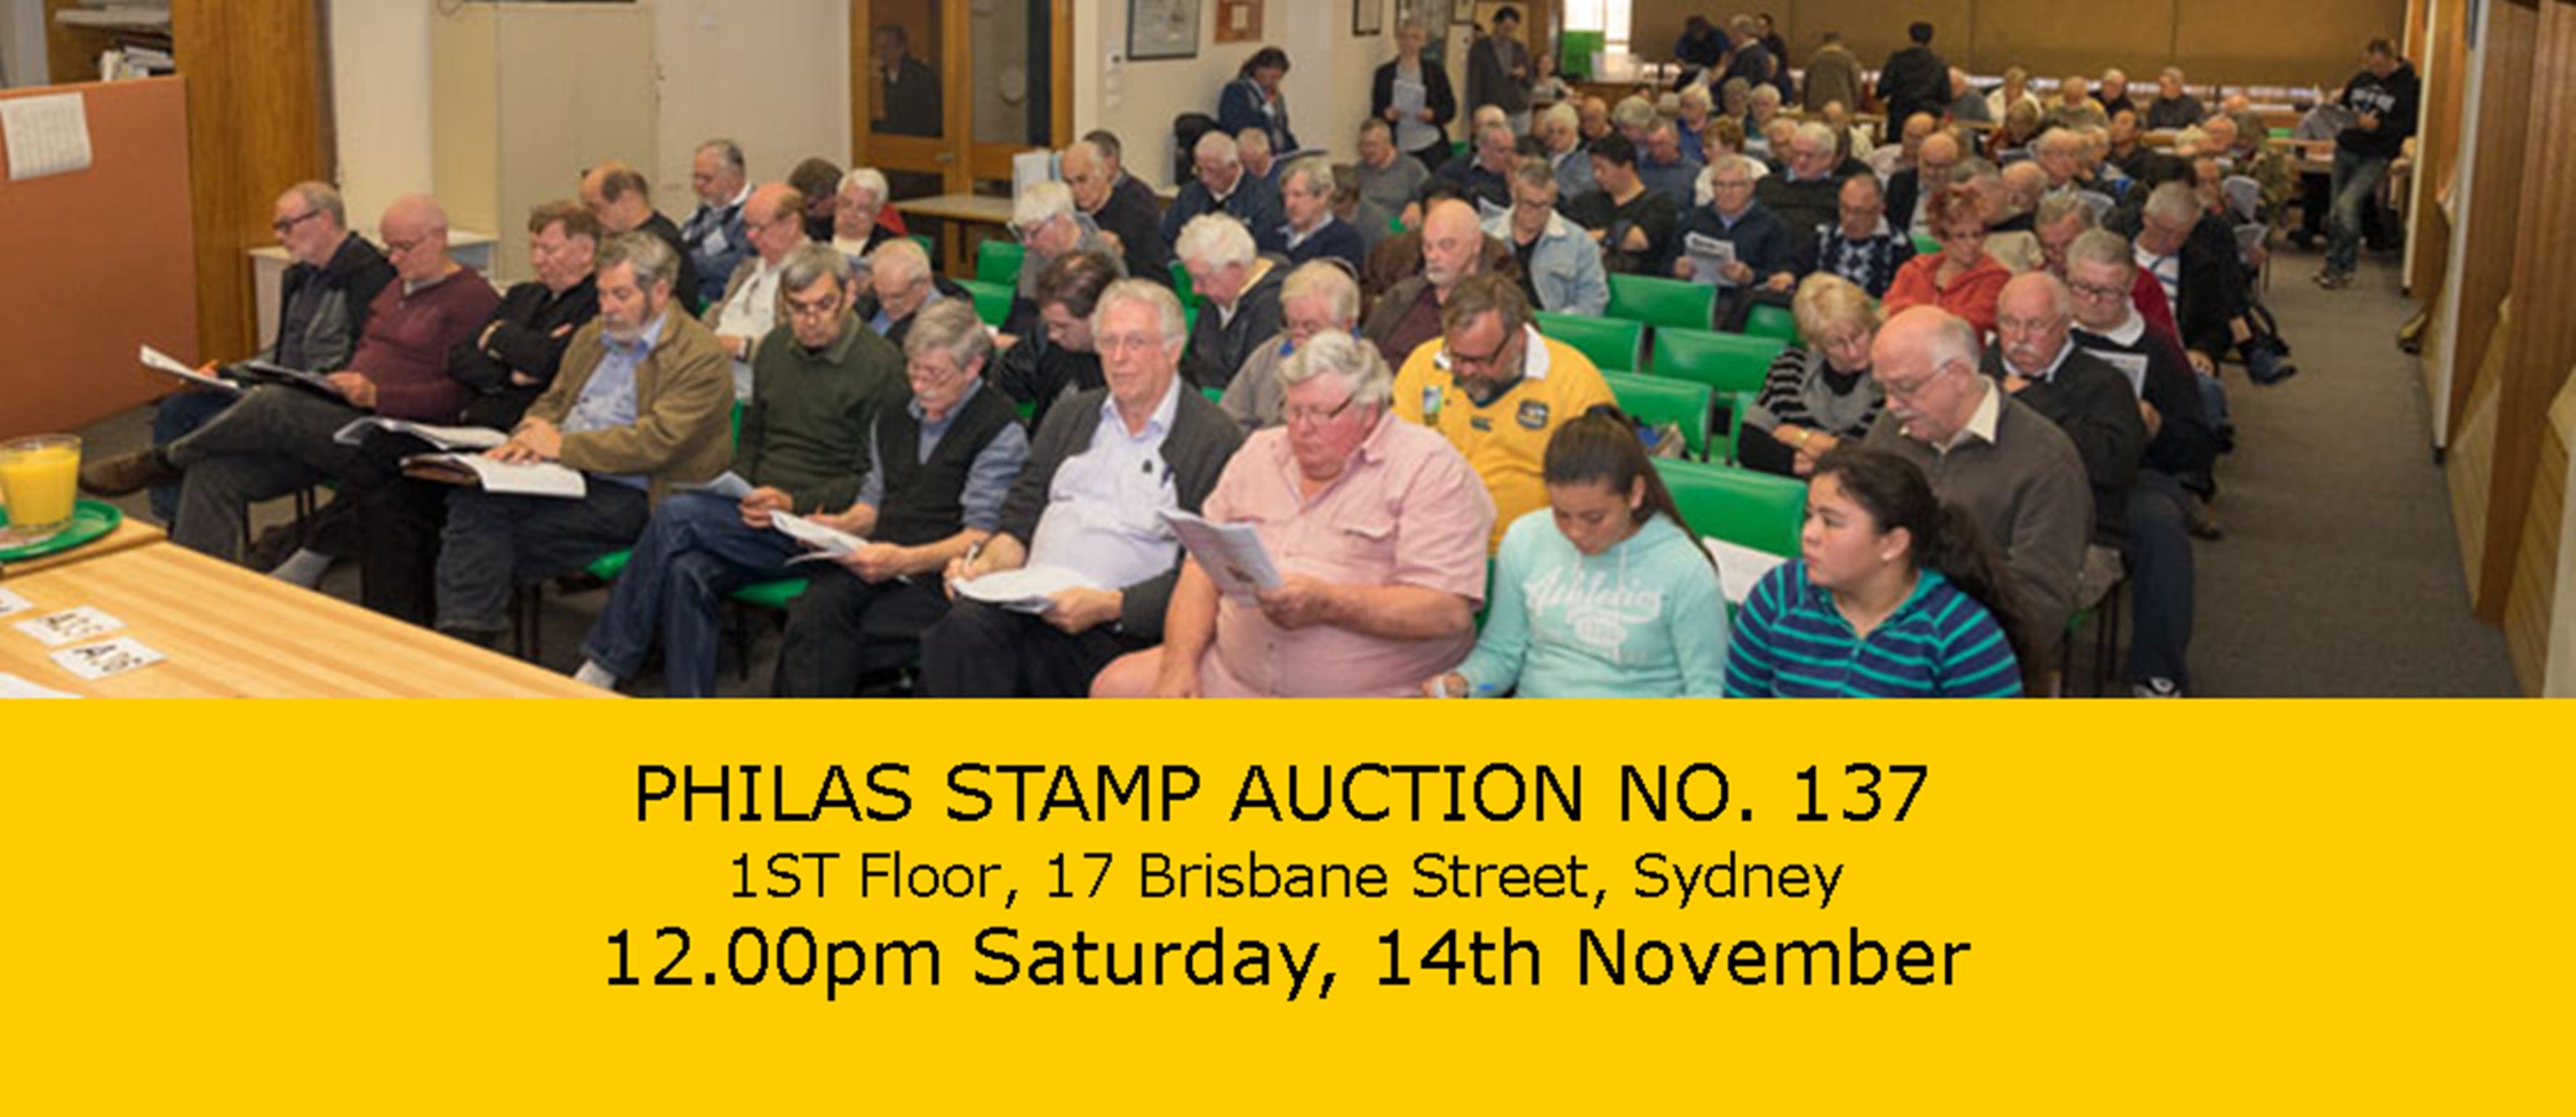 PHILAS Stamp Auction No. 137 - Tourism Gold Coast